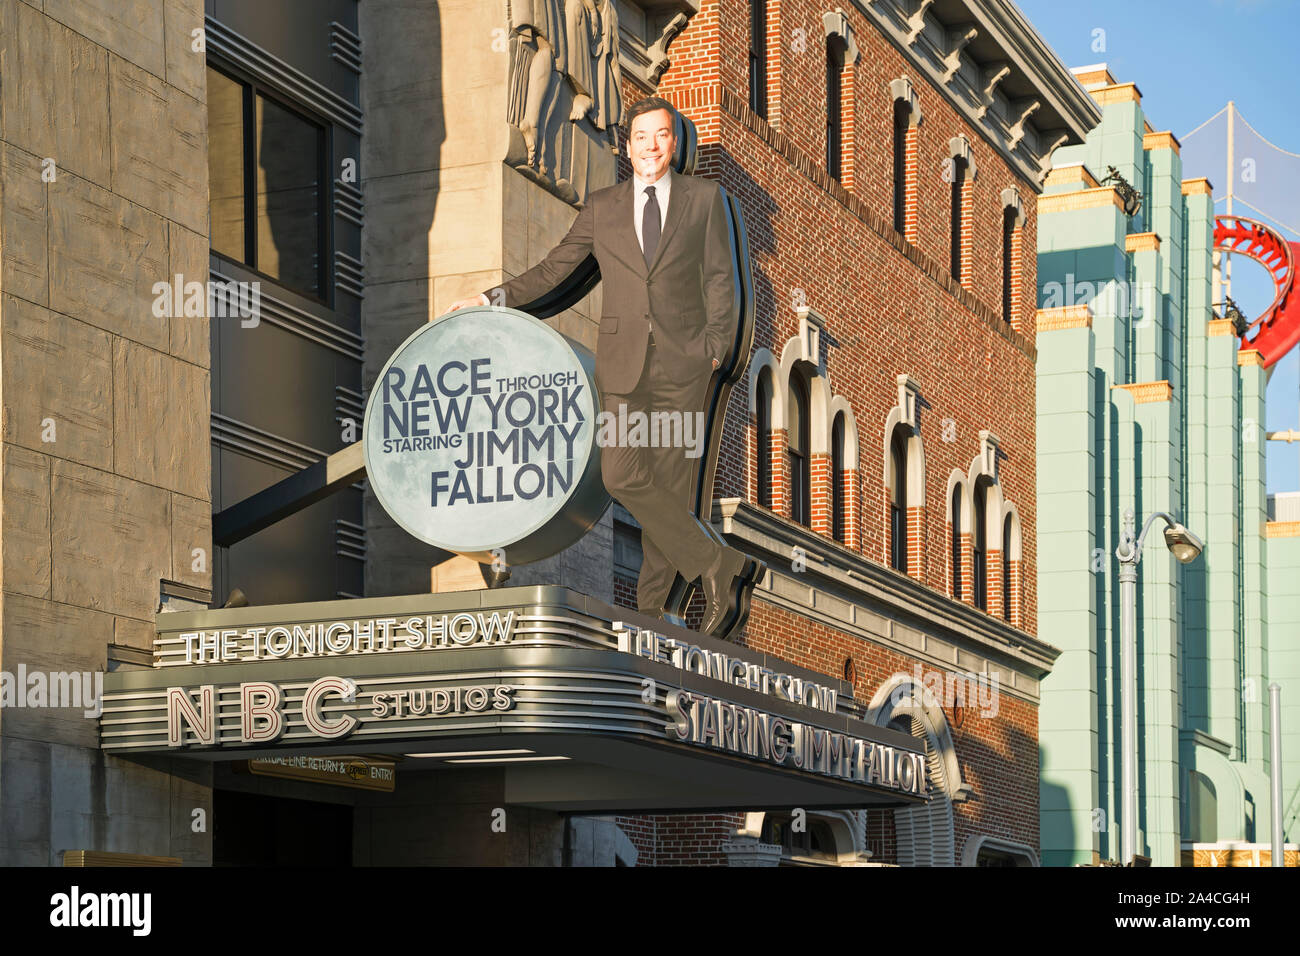 Jimmy Fallon's Race Through New York Ride, The Tonight Show NBC Studios, Universal Studios Resort, Orlando, Florida, USA Stock Photo